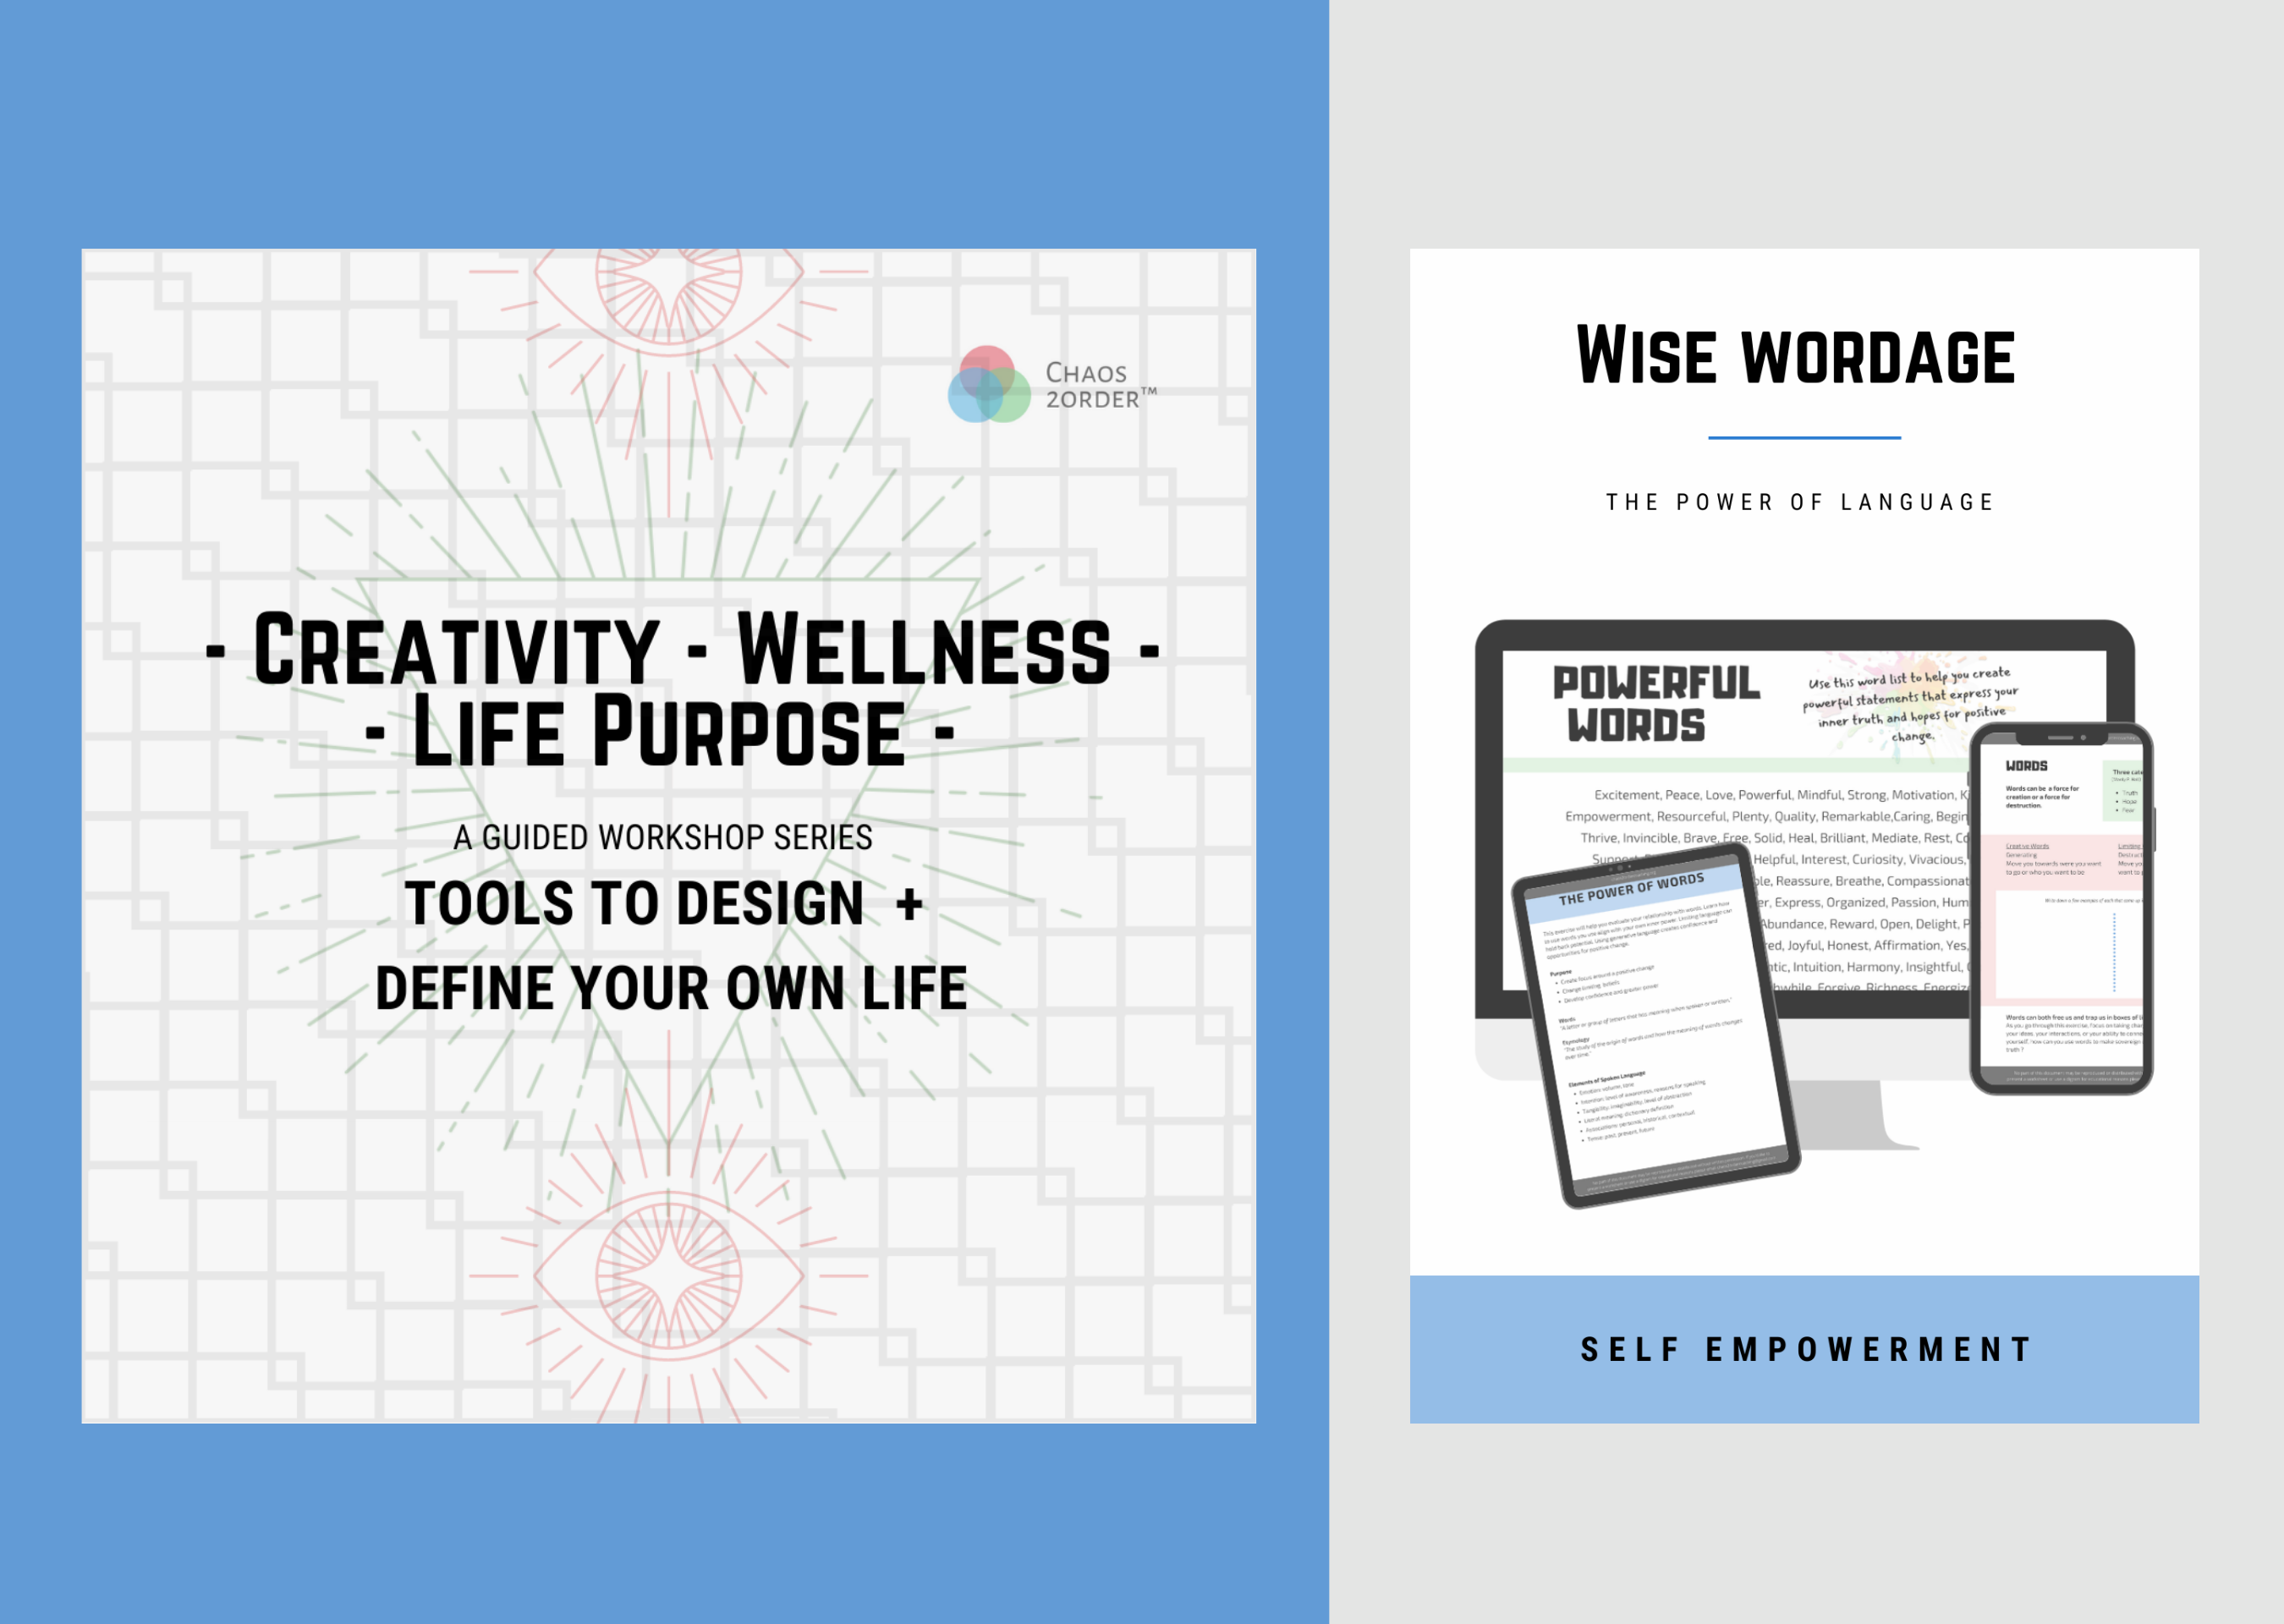 Creativity - Wellness - Life Purpose - Guided Workshop Series, The Power of Language, Self Empowerment